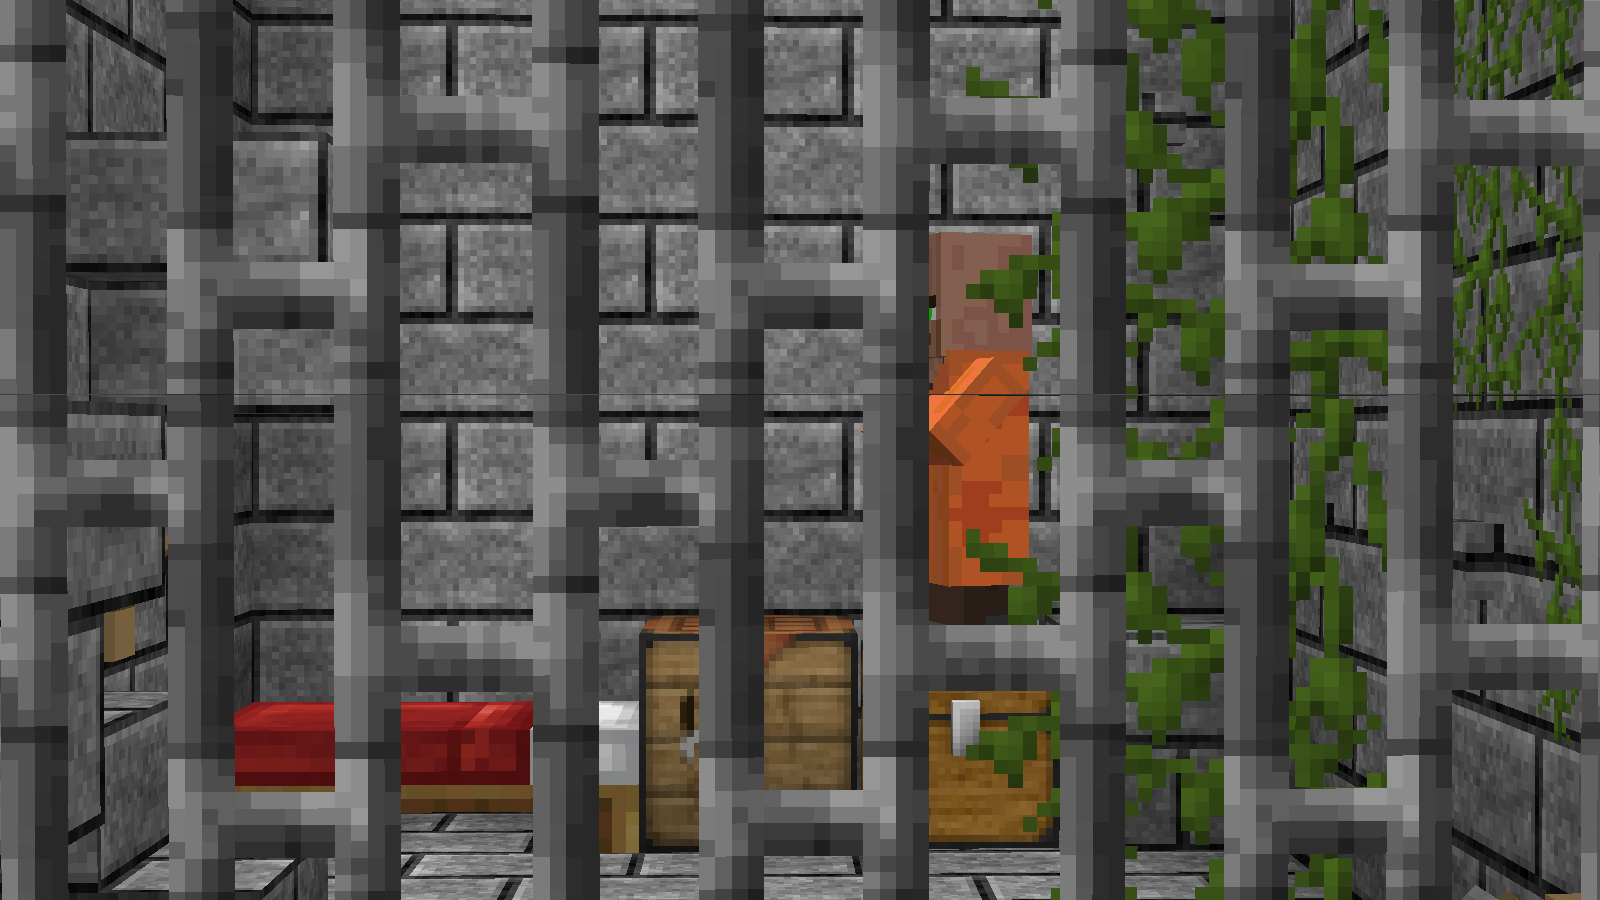 survivalcraft 2 prison escape map download v3